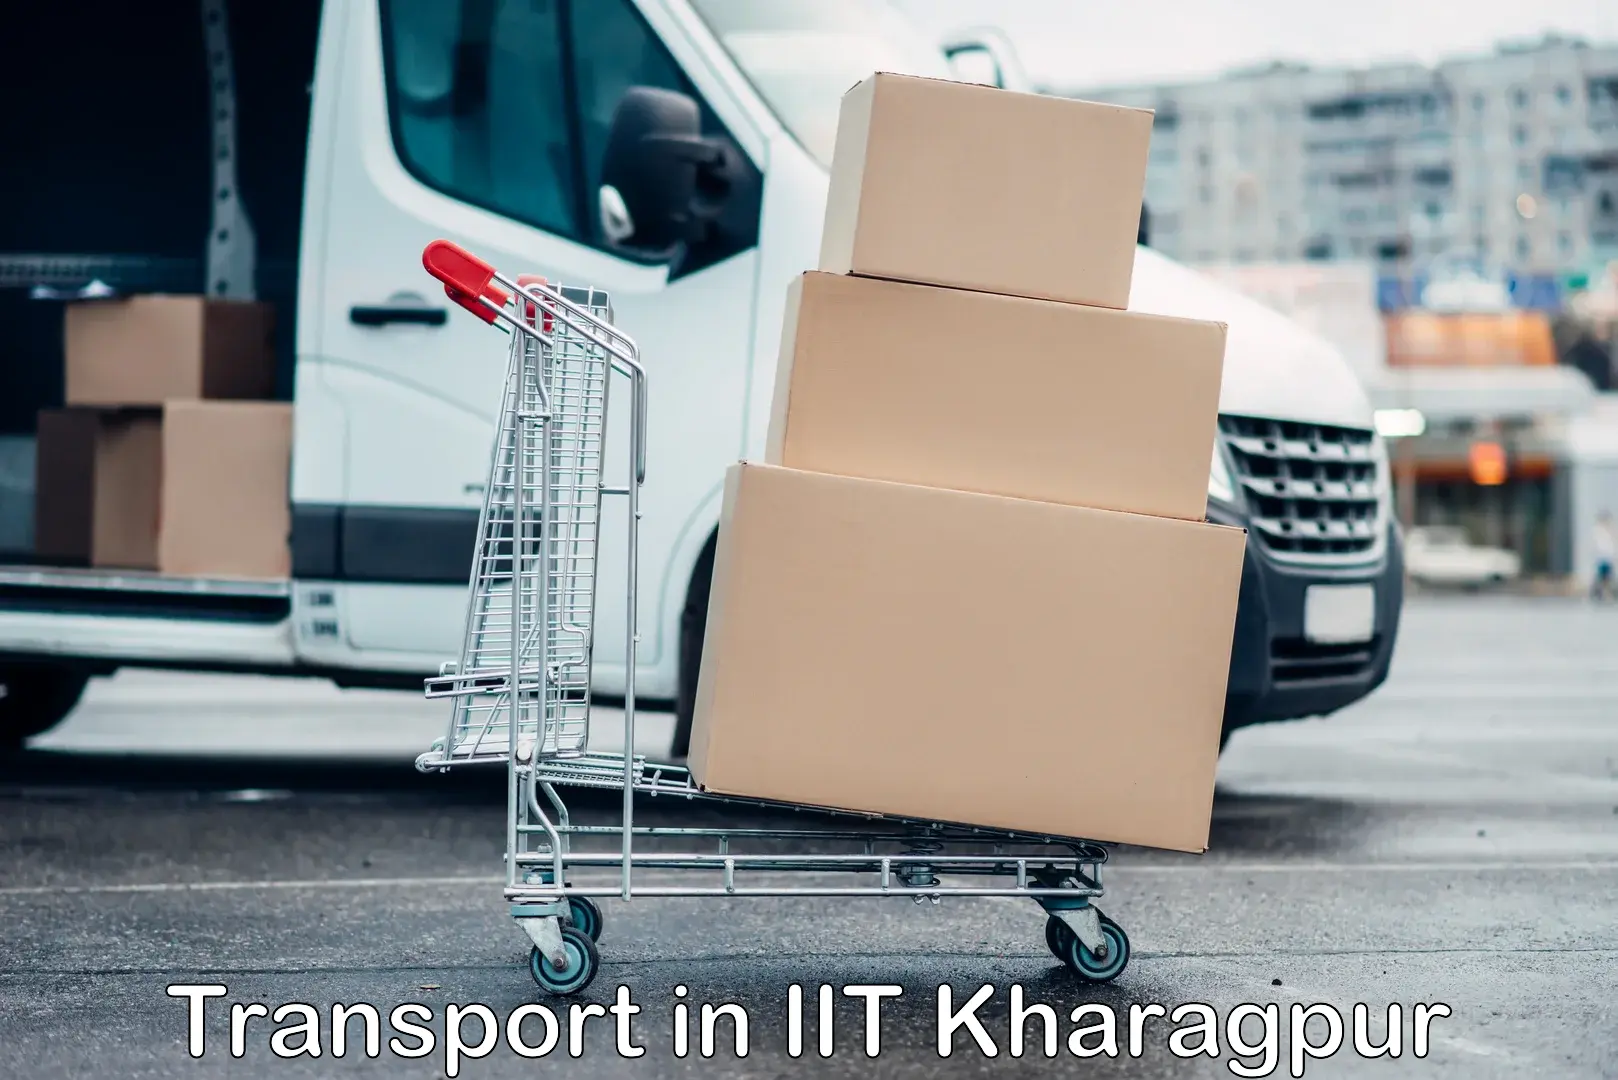 Interstate goods transport in IIT Kharagpur